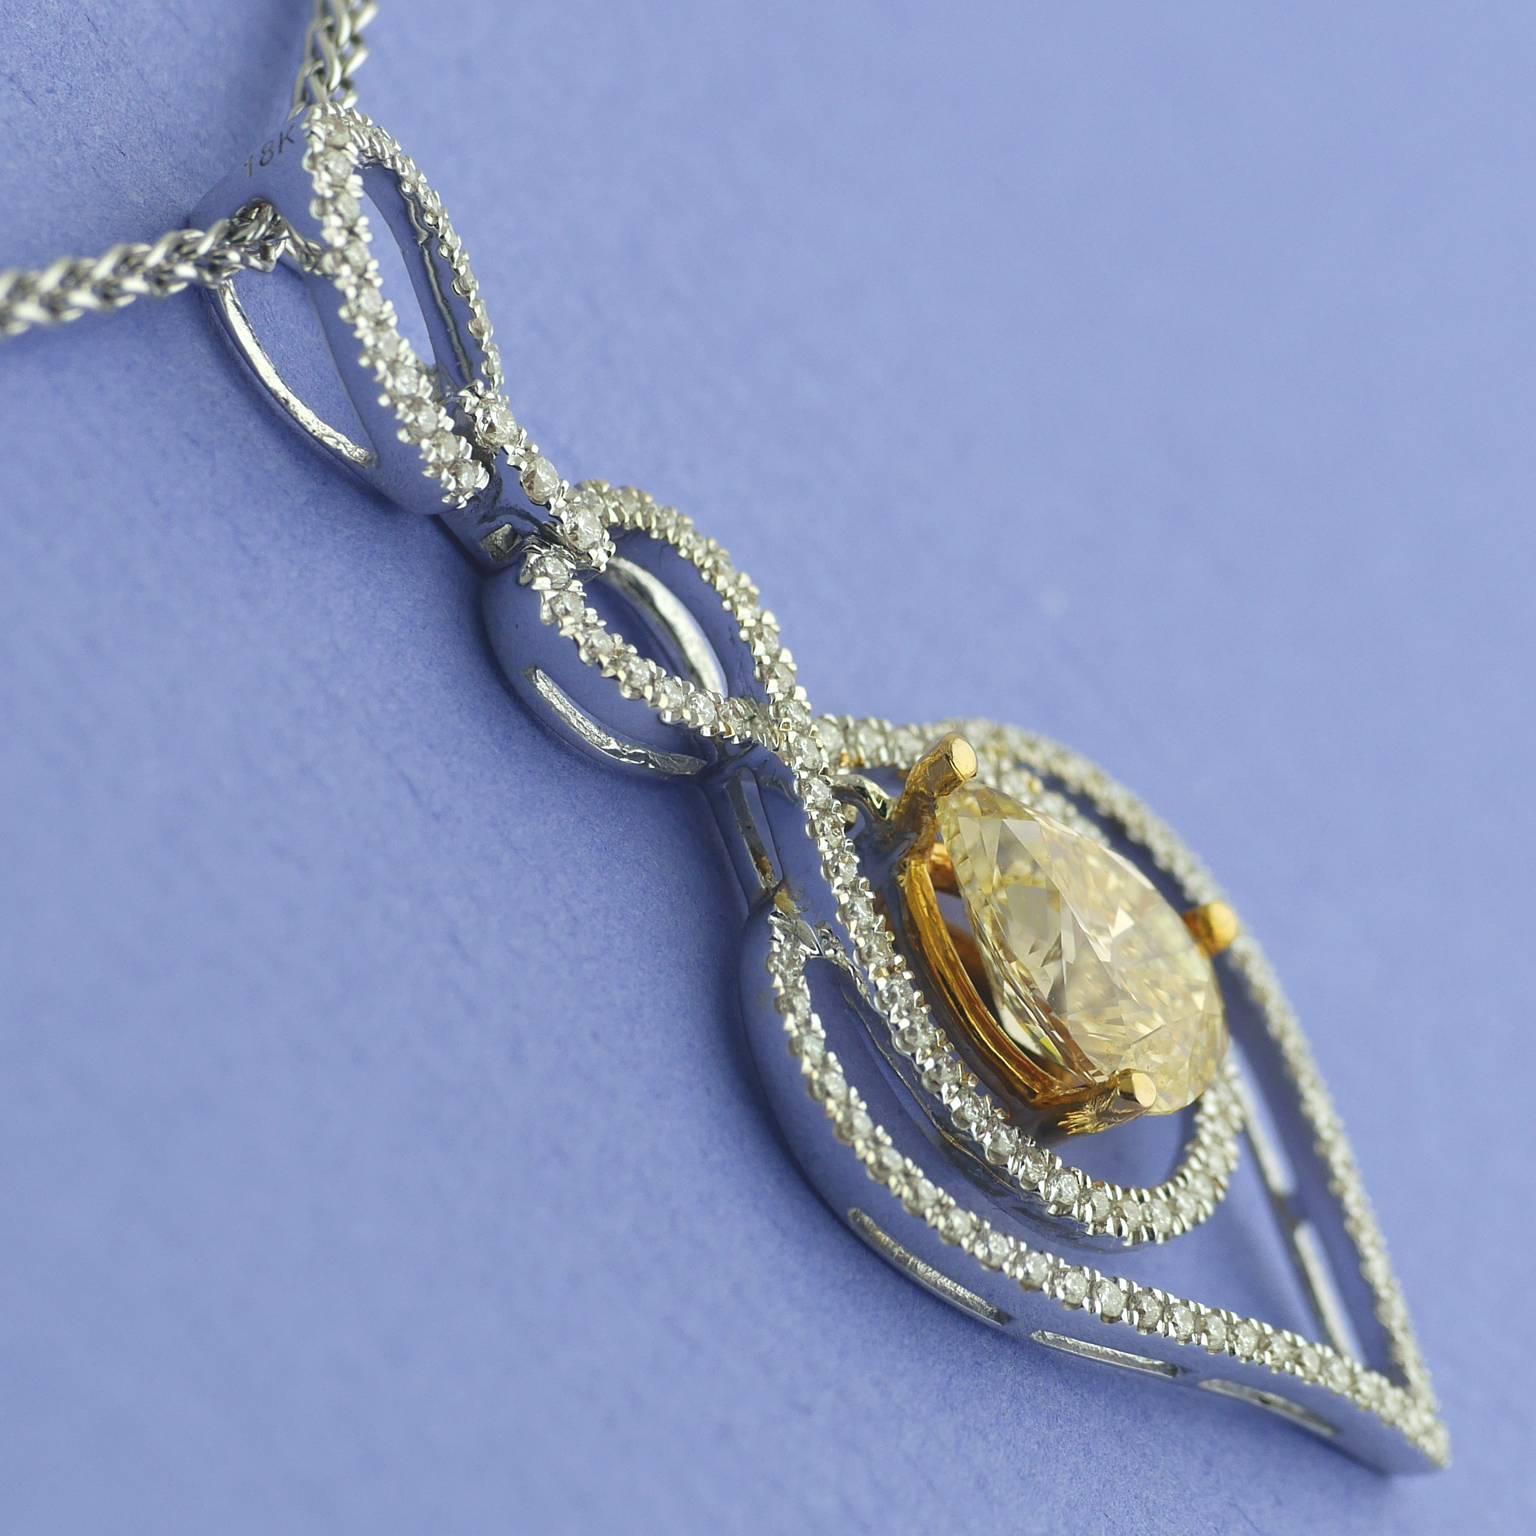 Women's Certified 2.03 Carat Pear Shape Fancy Yellow Diamond Pendant, circa 1970